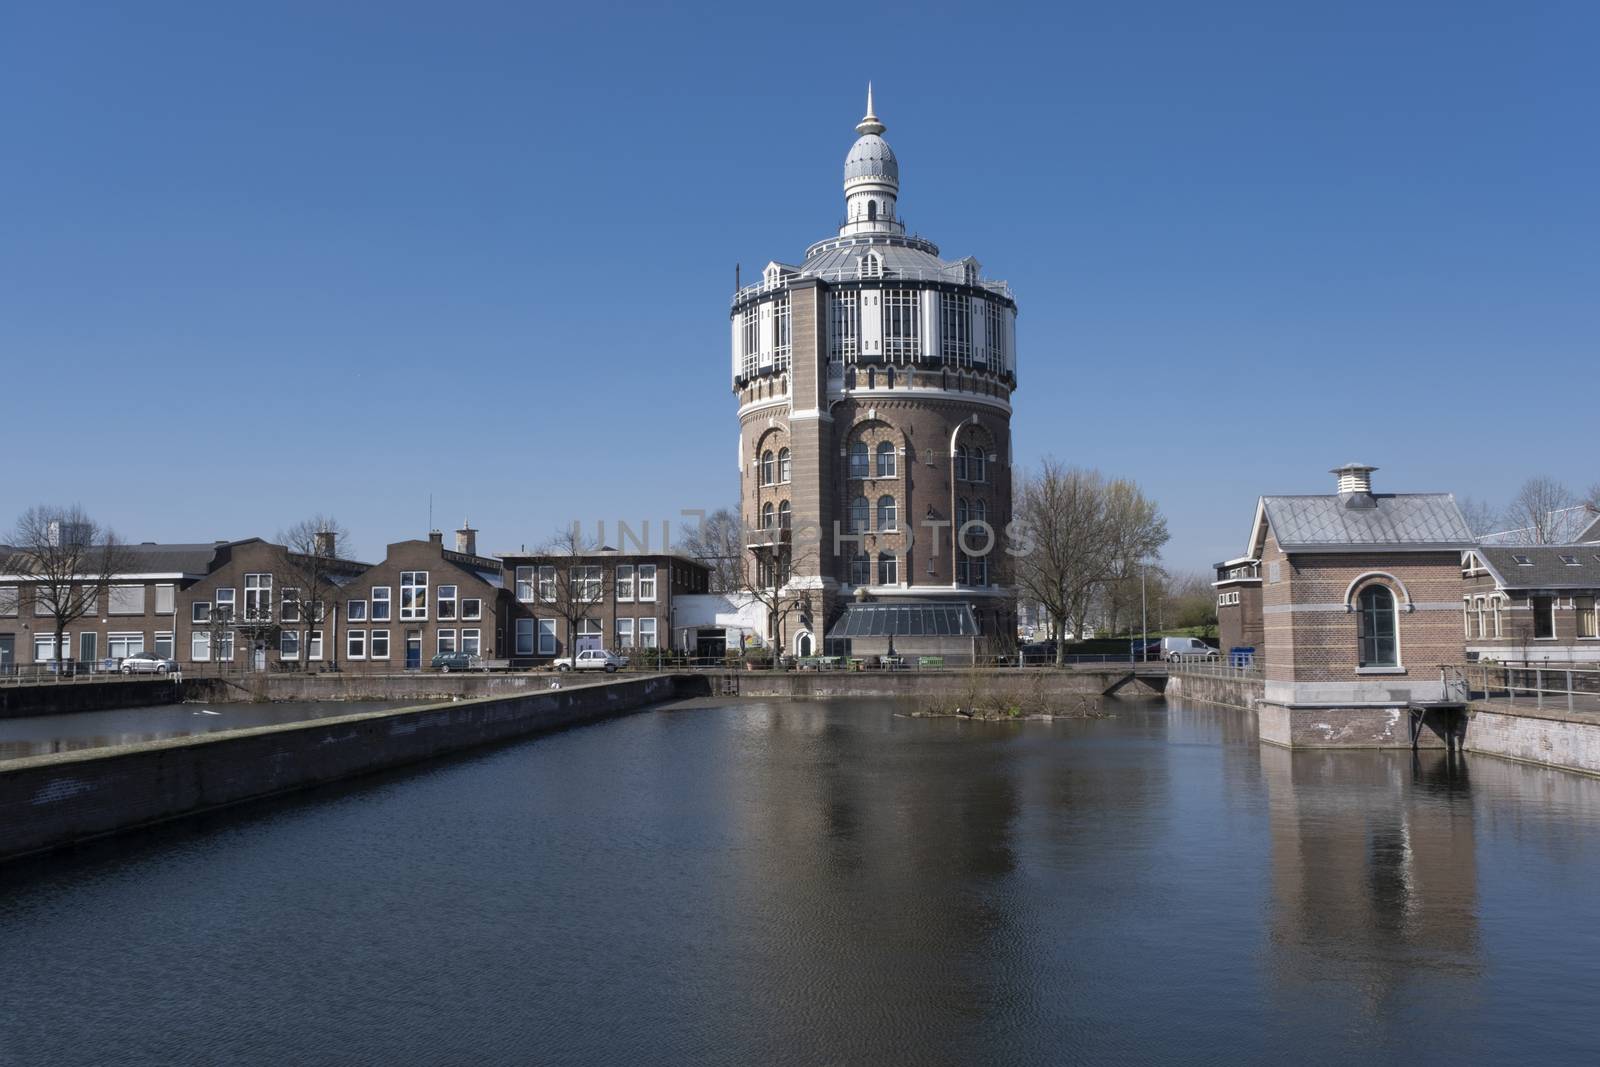 watertower de esch in rotterdam, The Netherlands by Tjeerdkruse